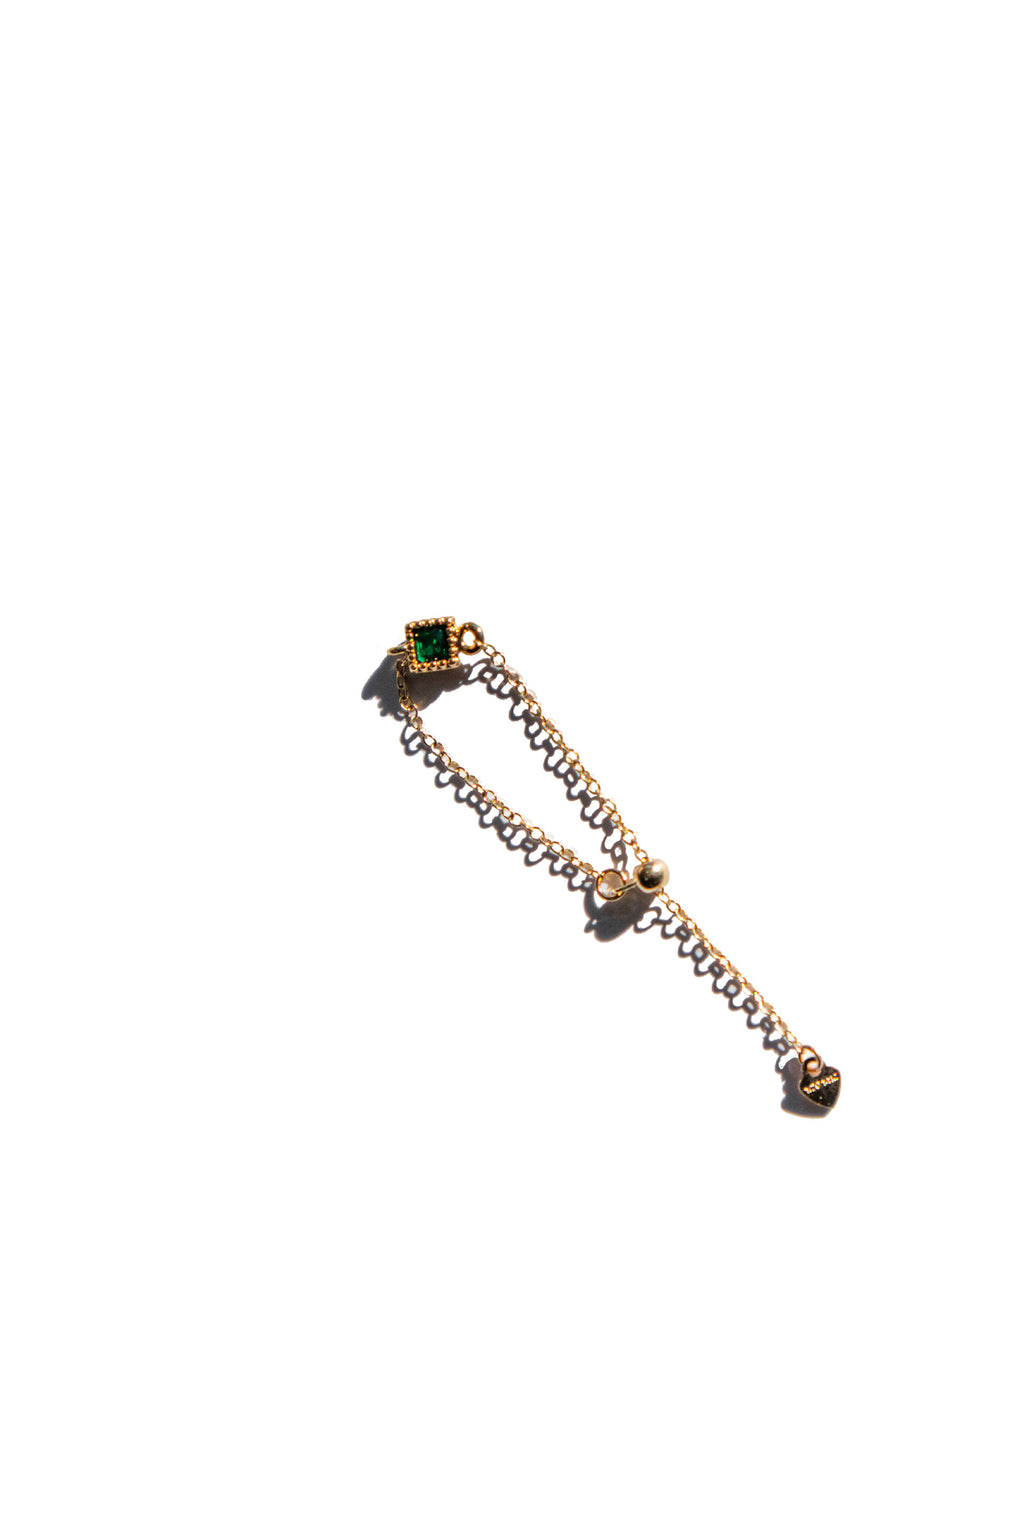 seree-harper-adjustable-skinny-ring-gold-vermeil